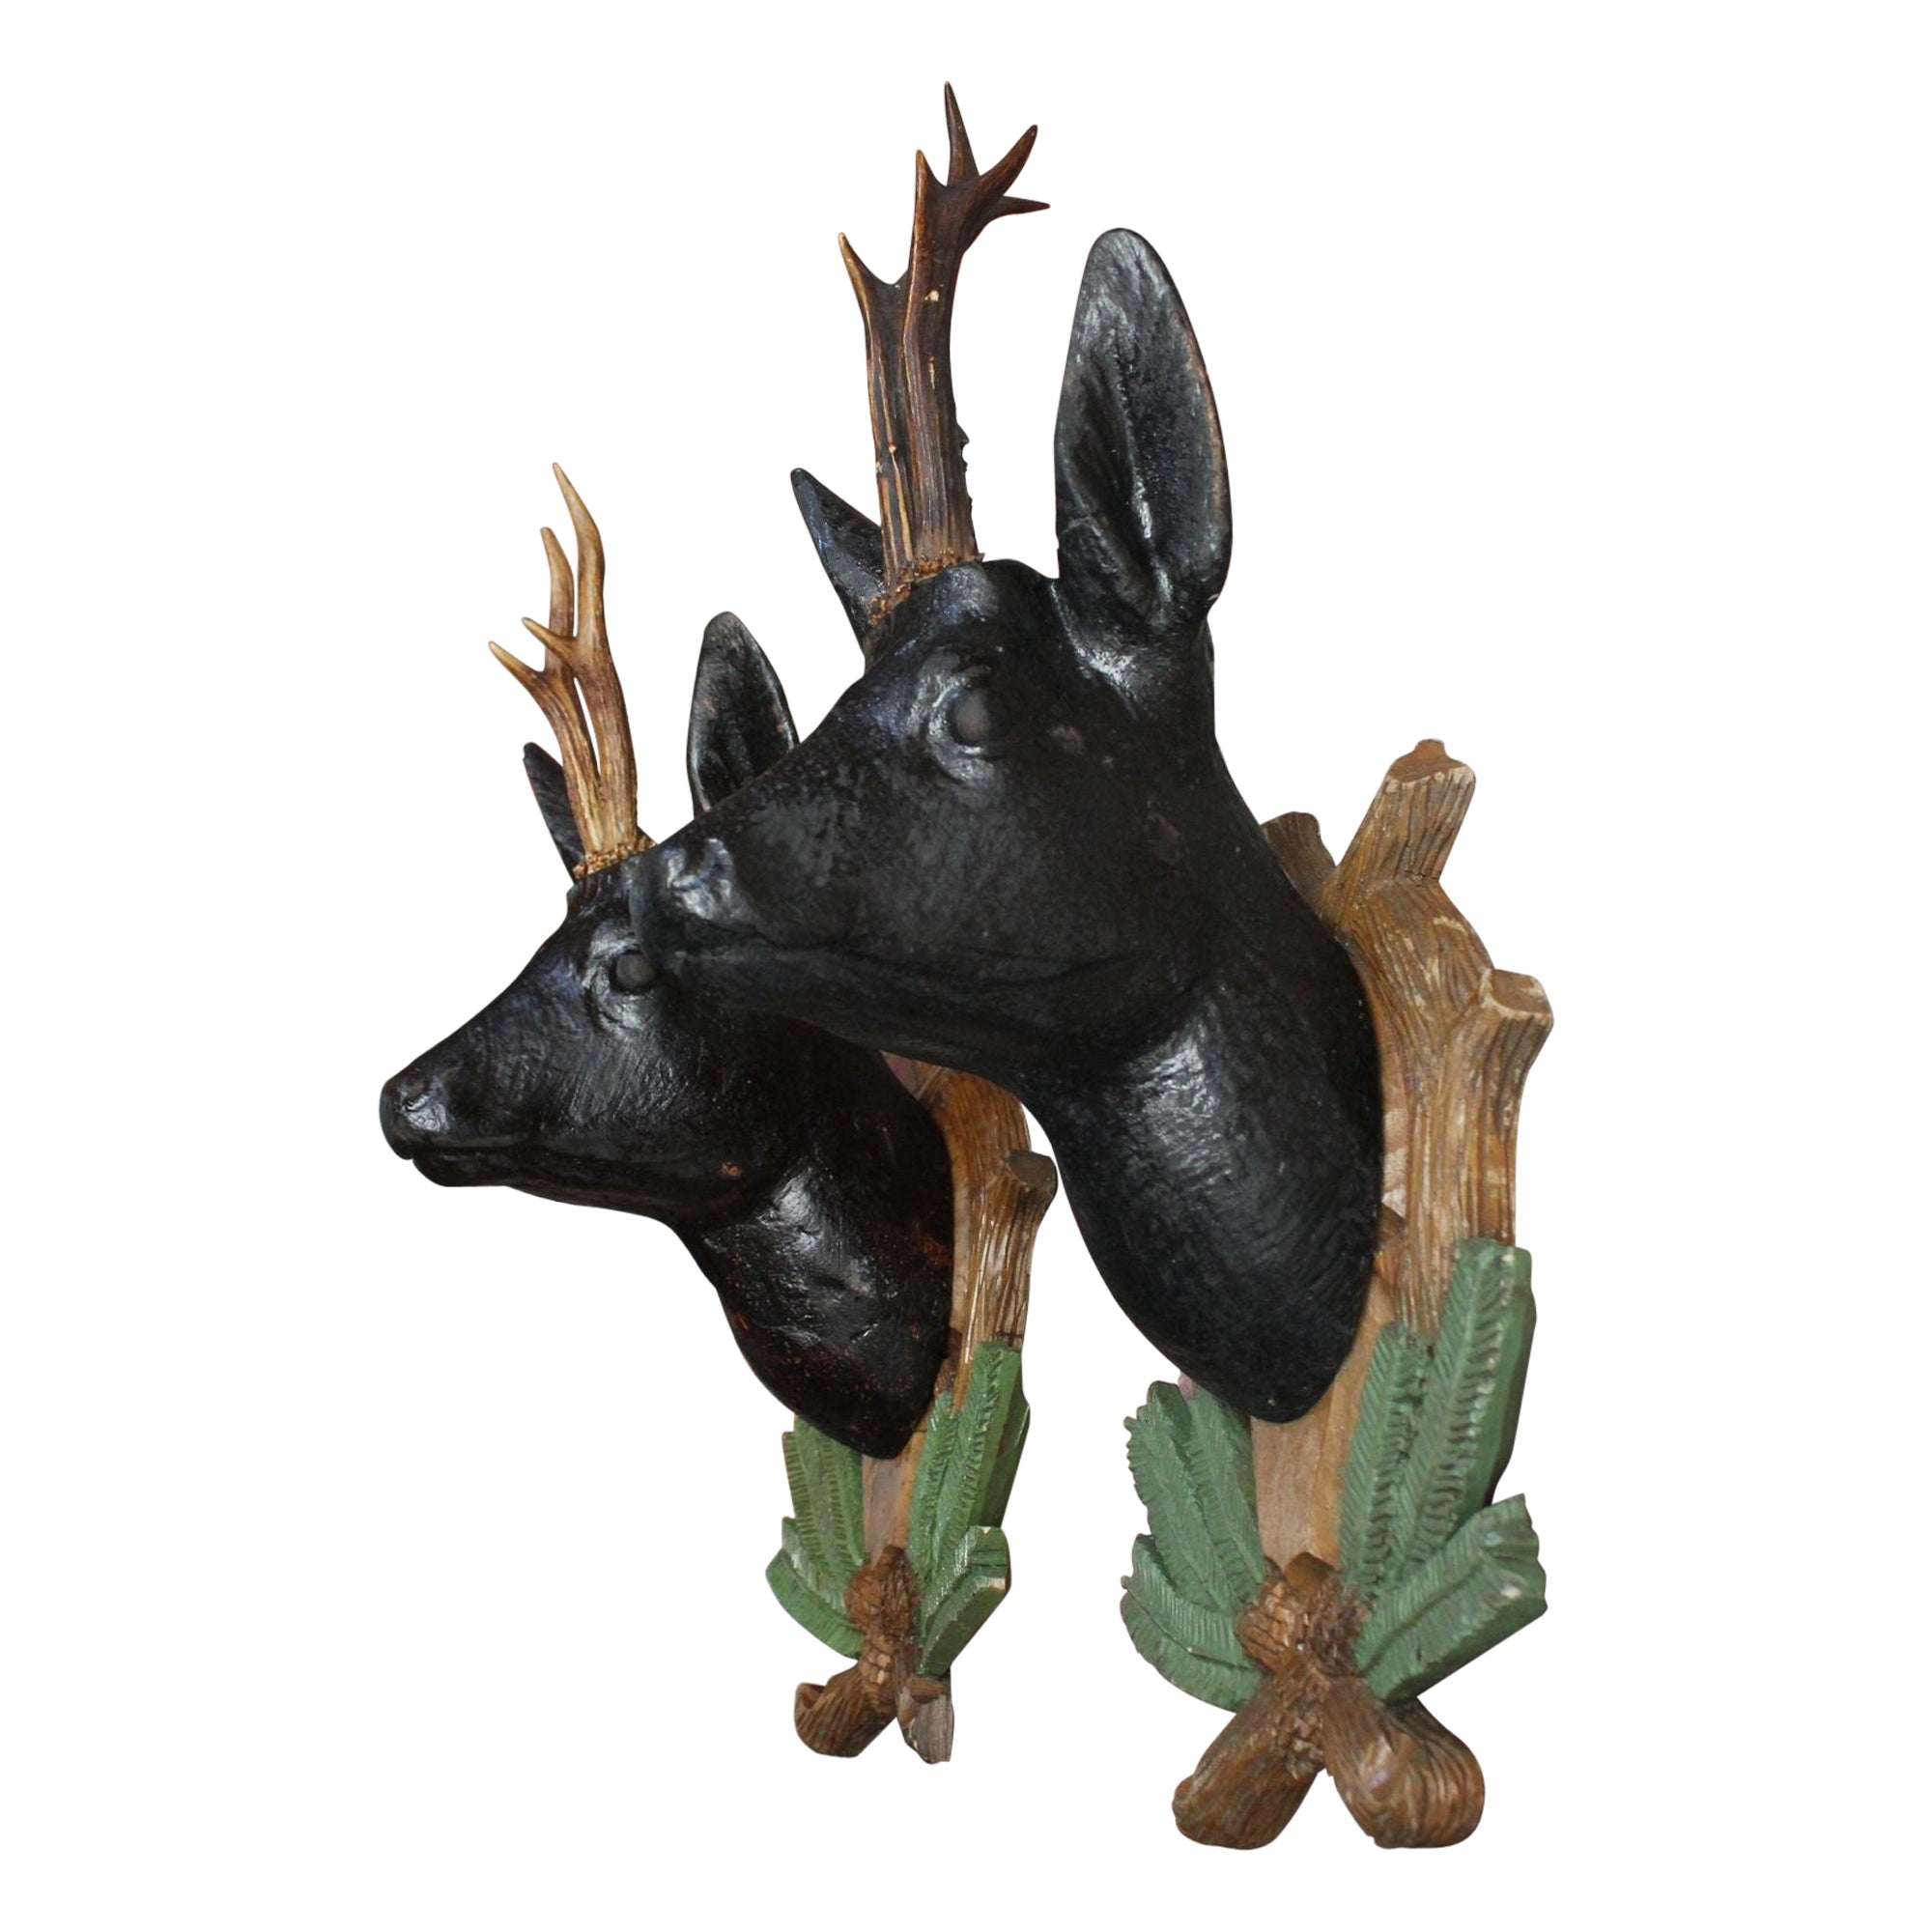 Pair of Vintage German Carved Black Forest Mounted Deer Wall Sculptures For Sale